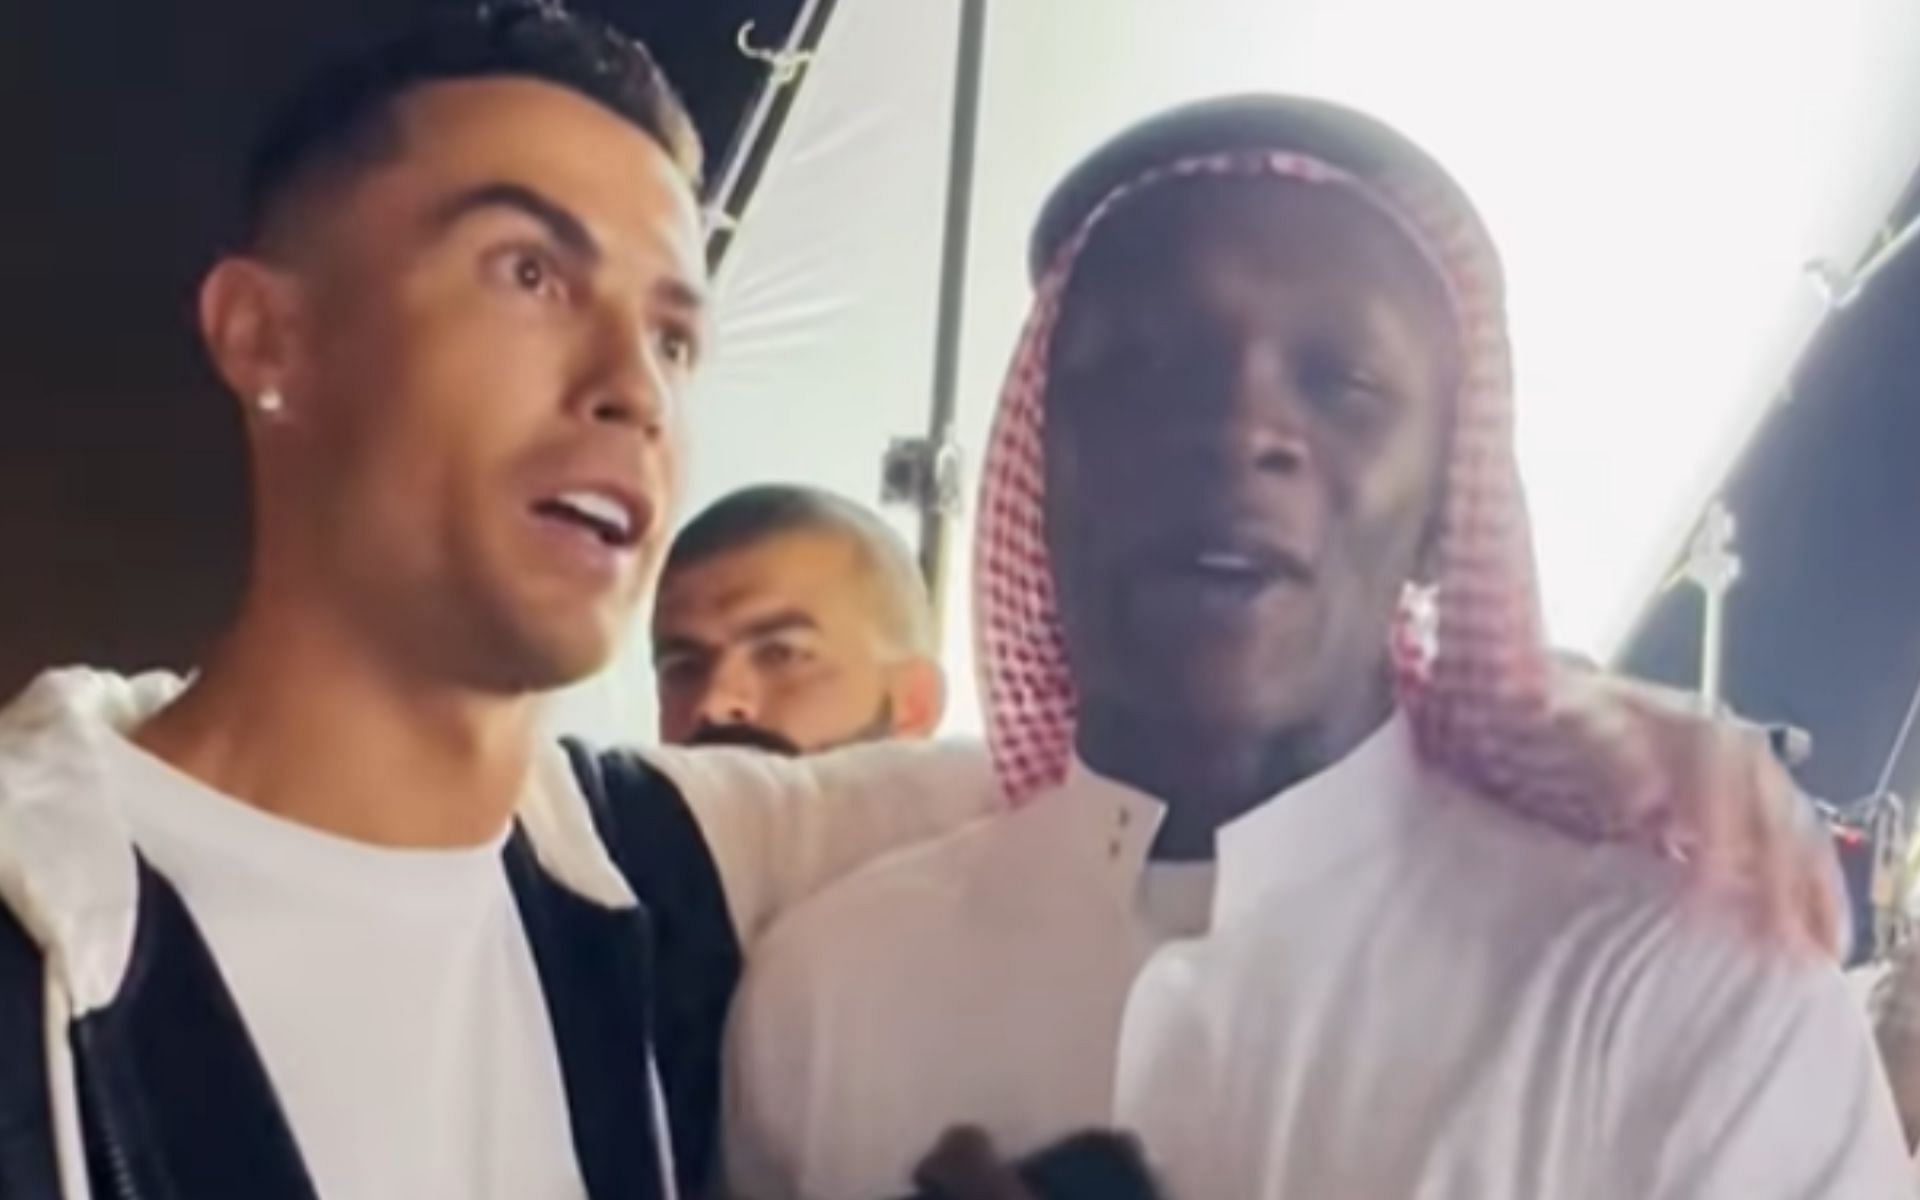 Israel Adesanya (right) discusses meeting Cristiano Ronaldo (left) in Saudi Arabia [Image courtesy of @stylebender on Instagram]